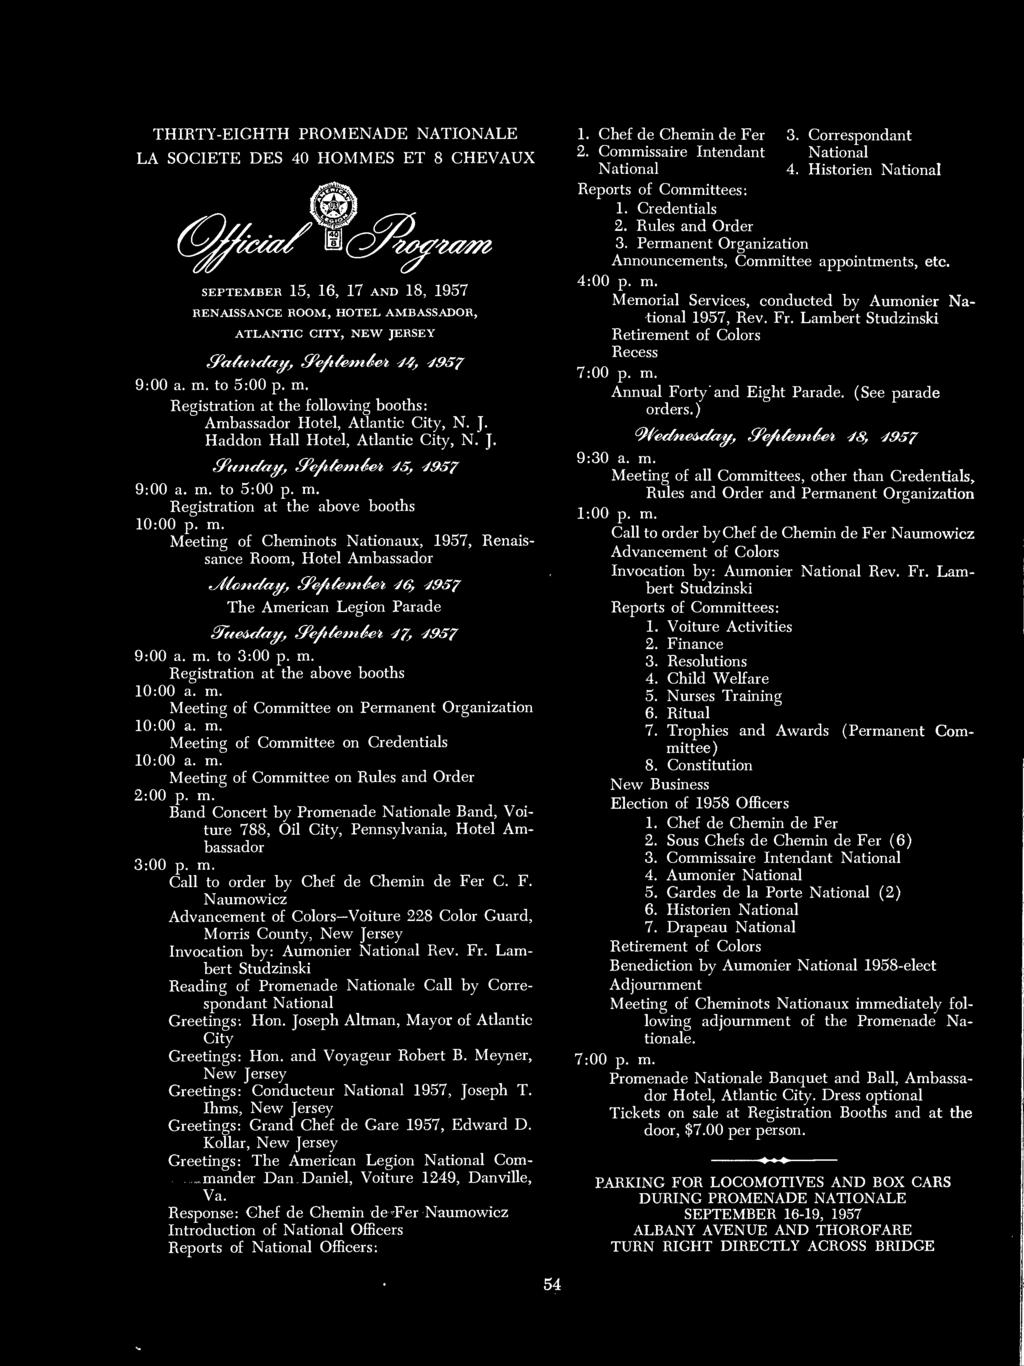 m. Regtration at the above booths 10:00 p. m. Meeting of Cheminots Nationaux, 1957, Renasance Room, Hotel Ambassador tsitvnslaijj J6', j95f The American Legion Parade SPefi/etn&e i -J7, J95? 9:00 a.